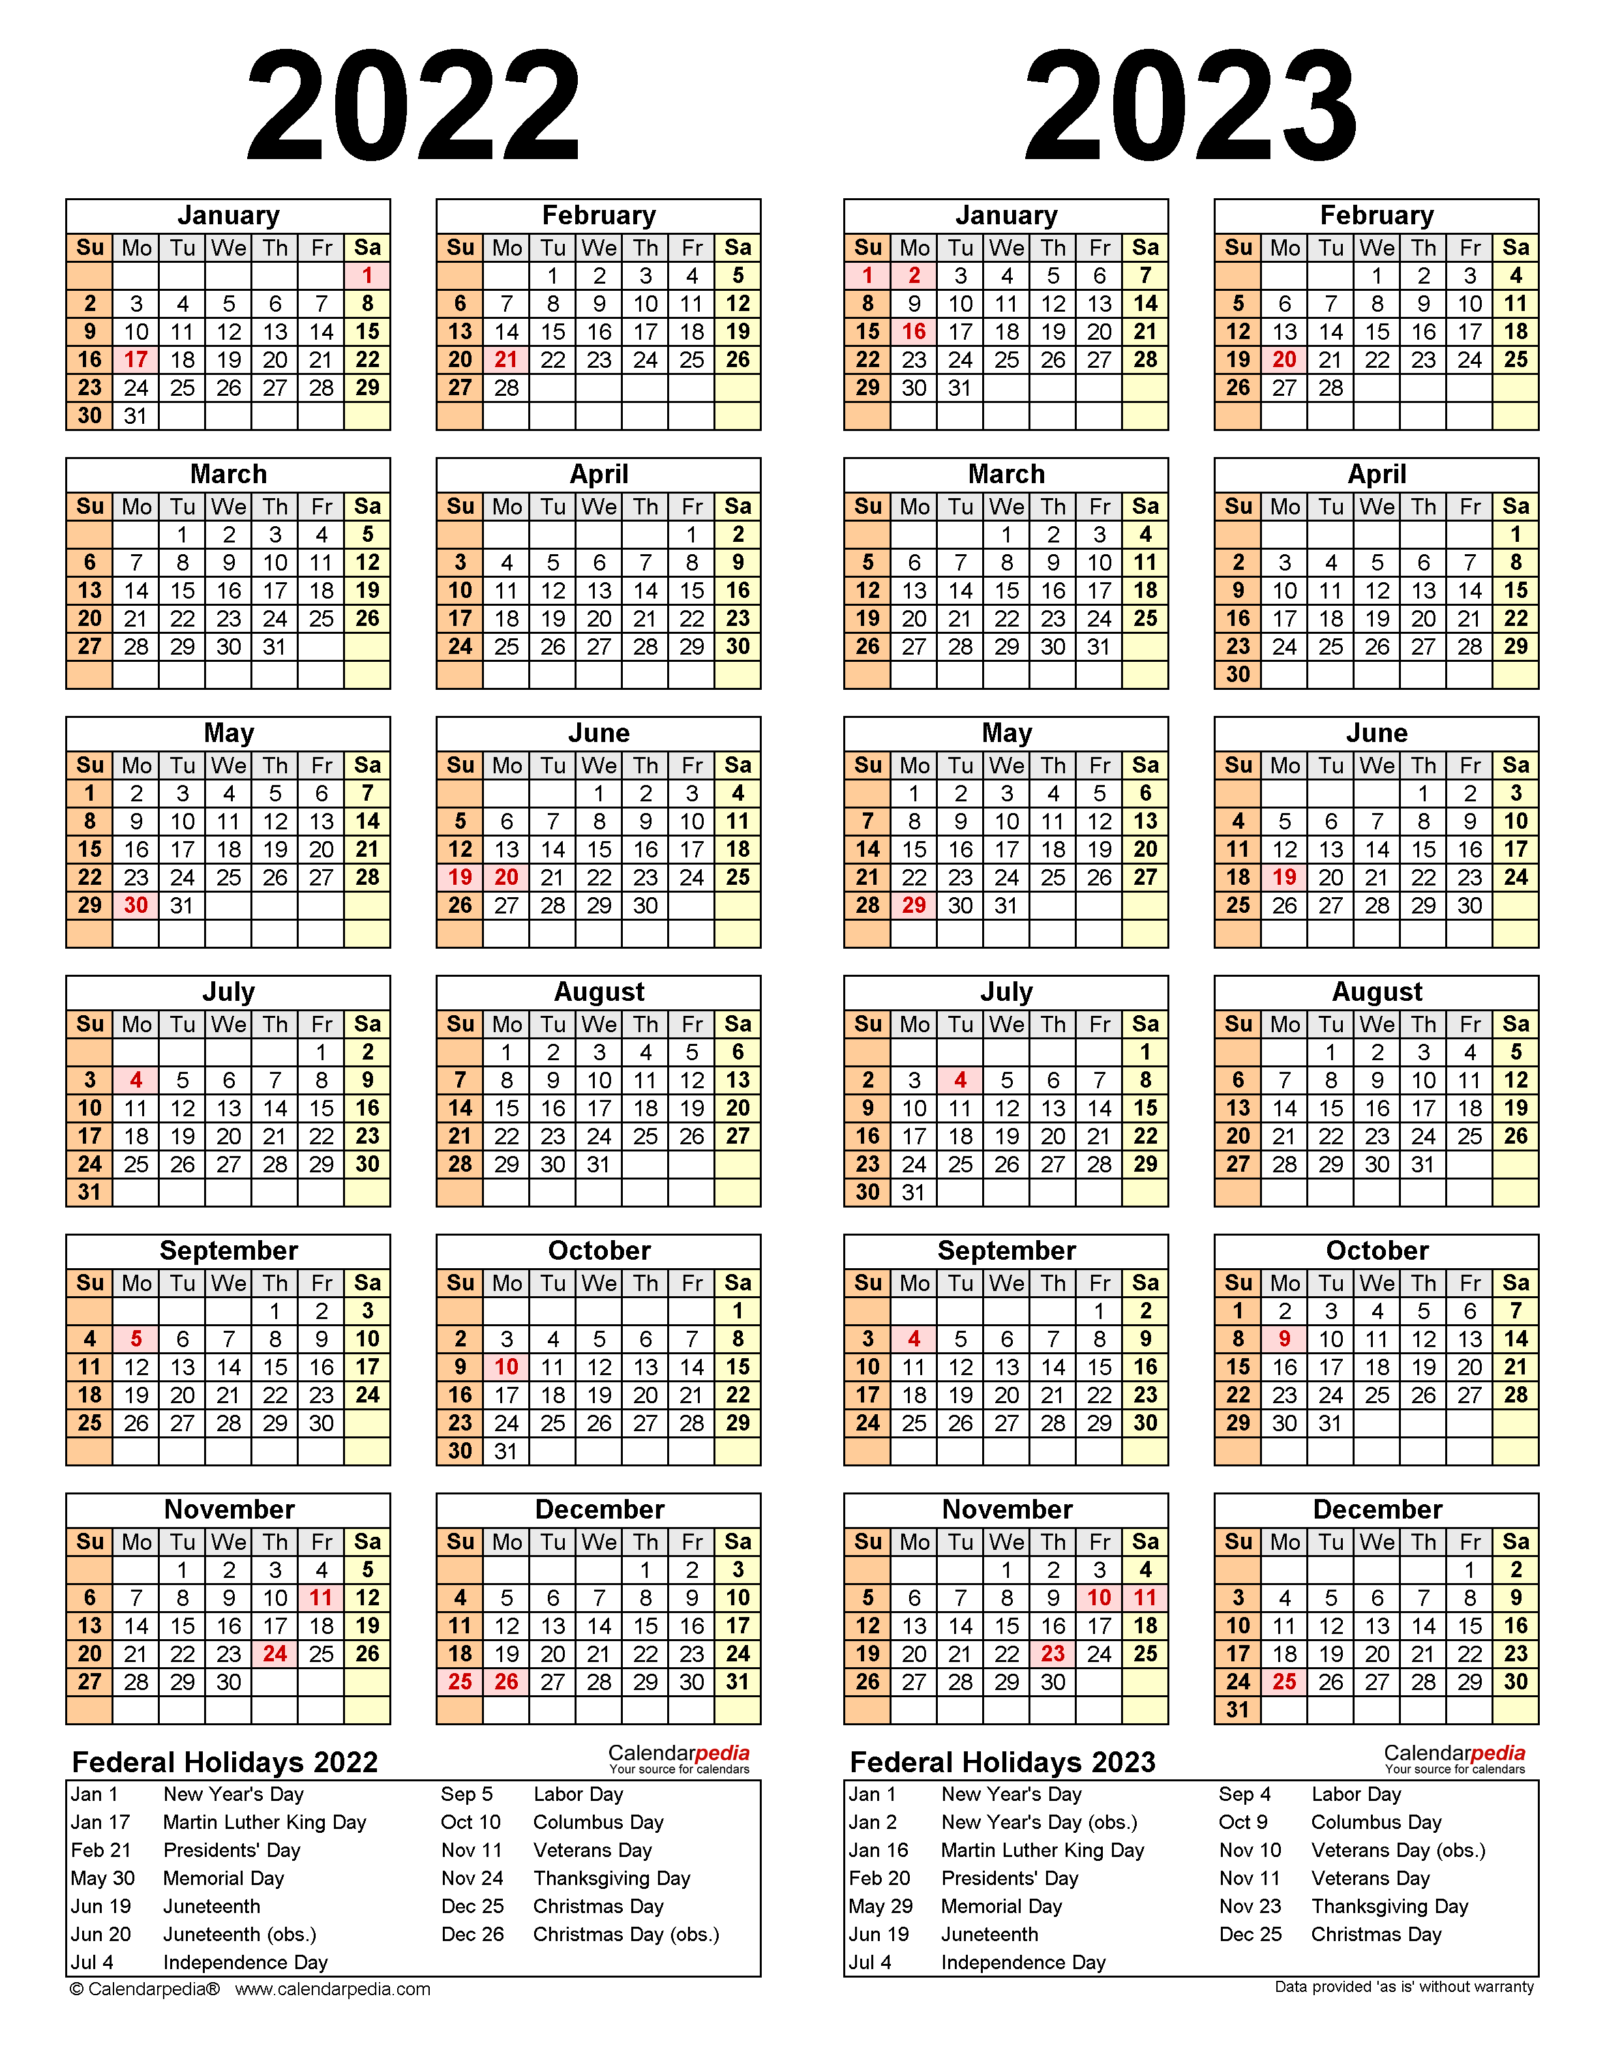 asu-prep-calendar-2022-2023-2023-calender-universitycalendars